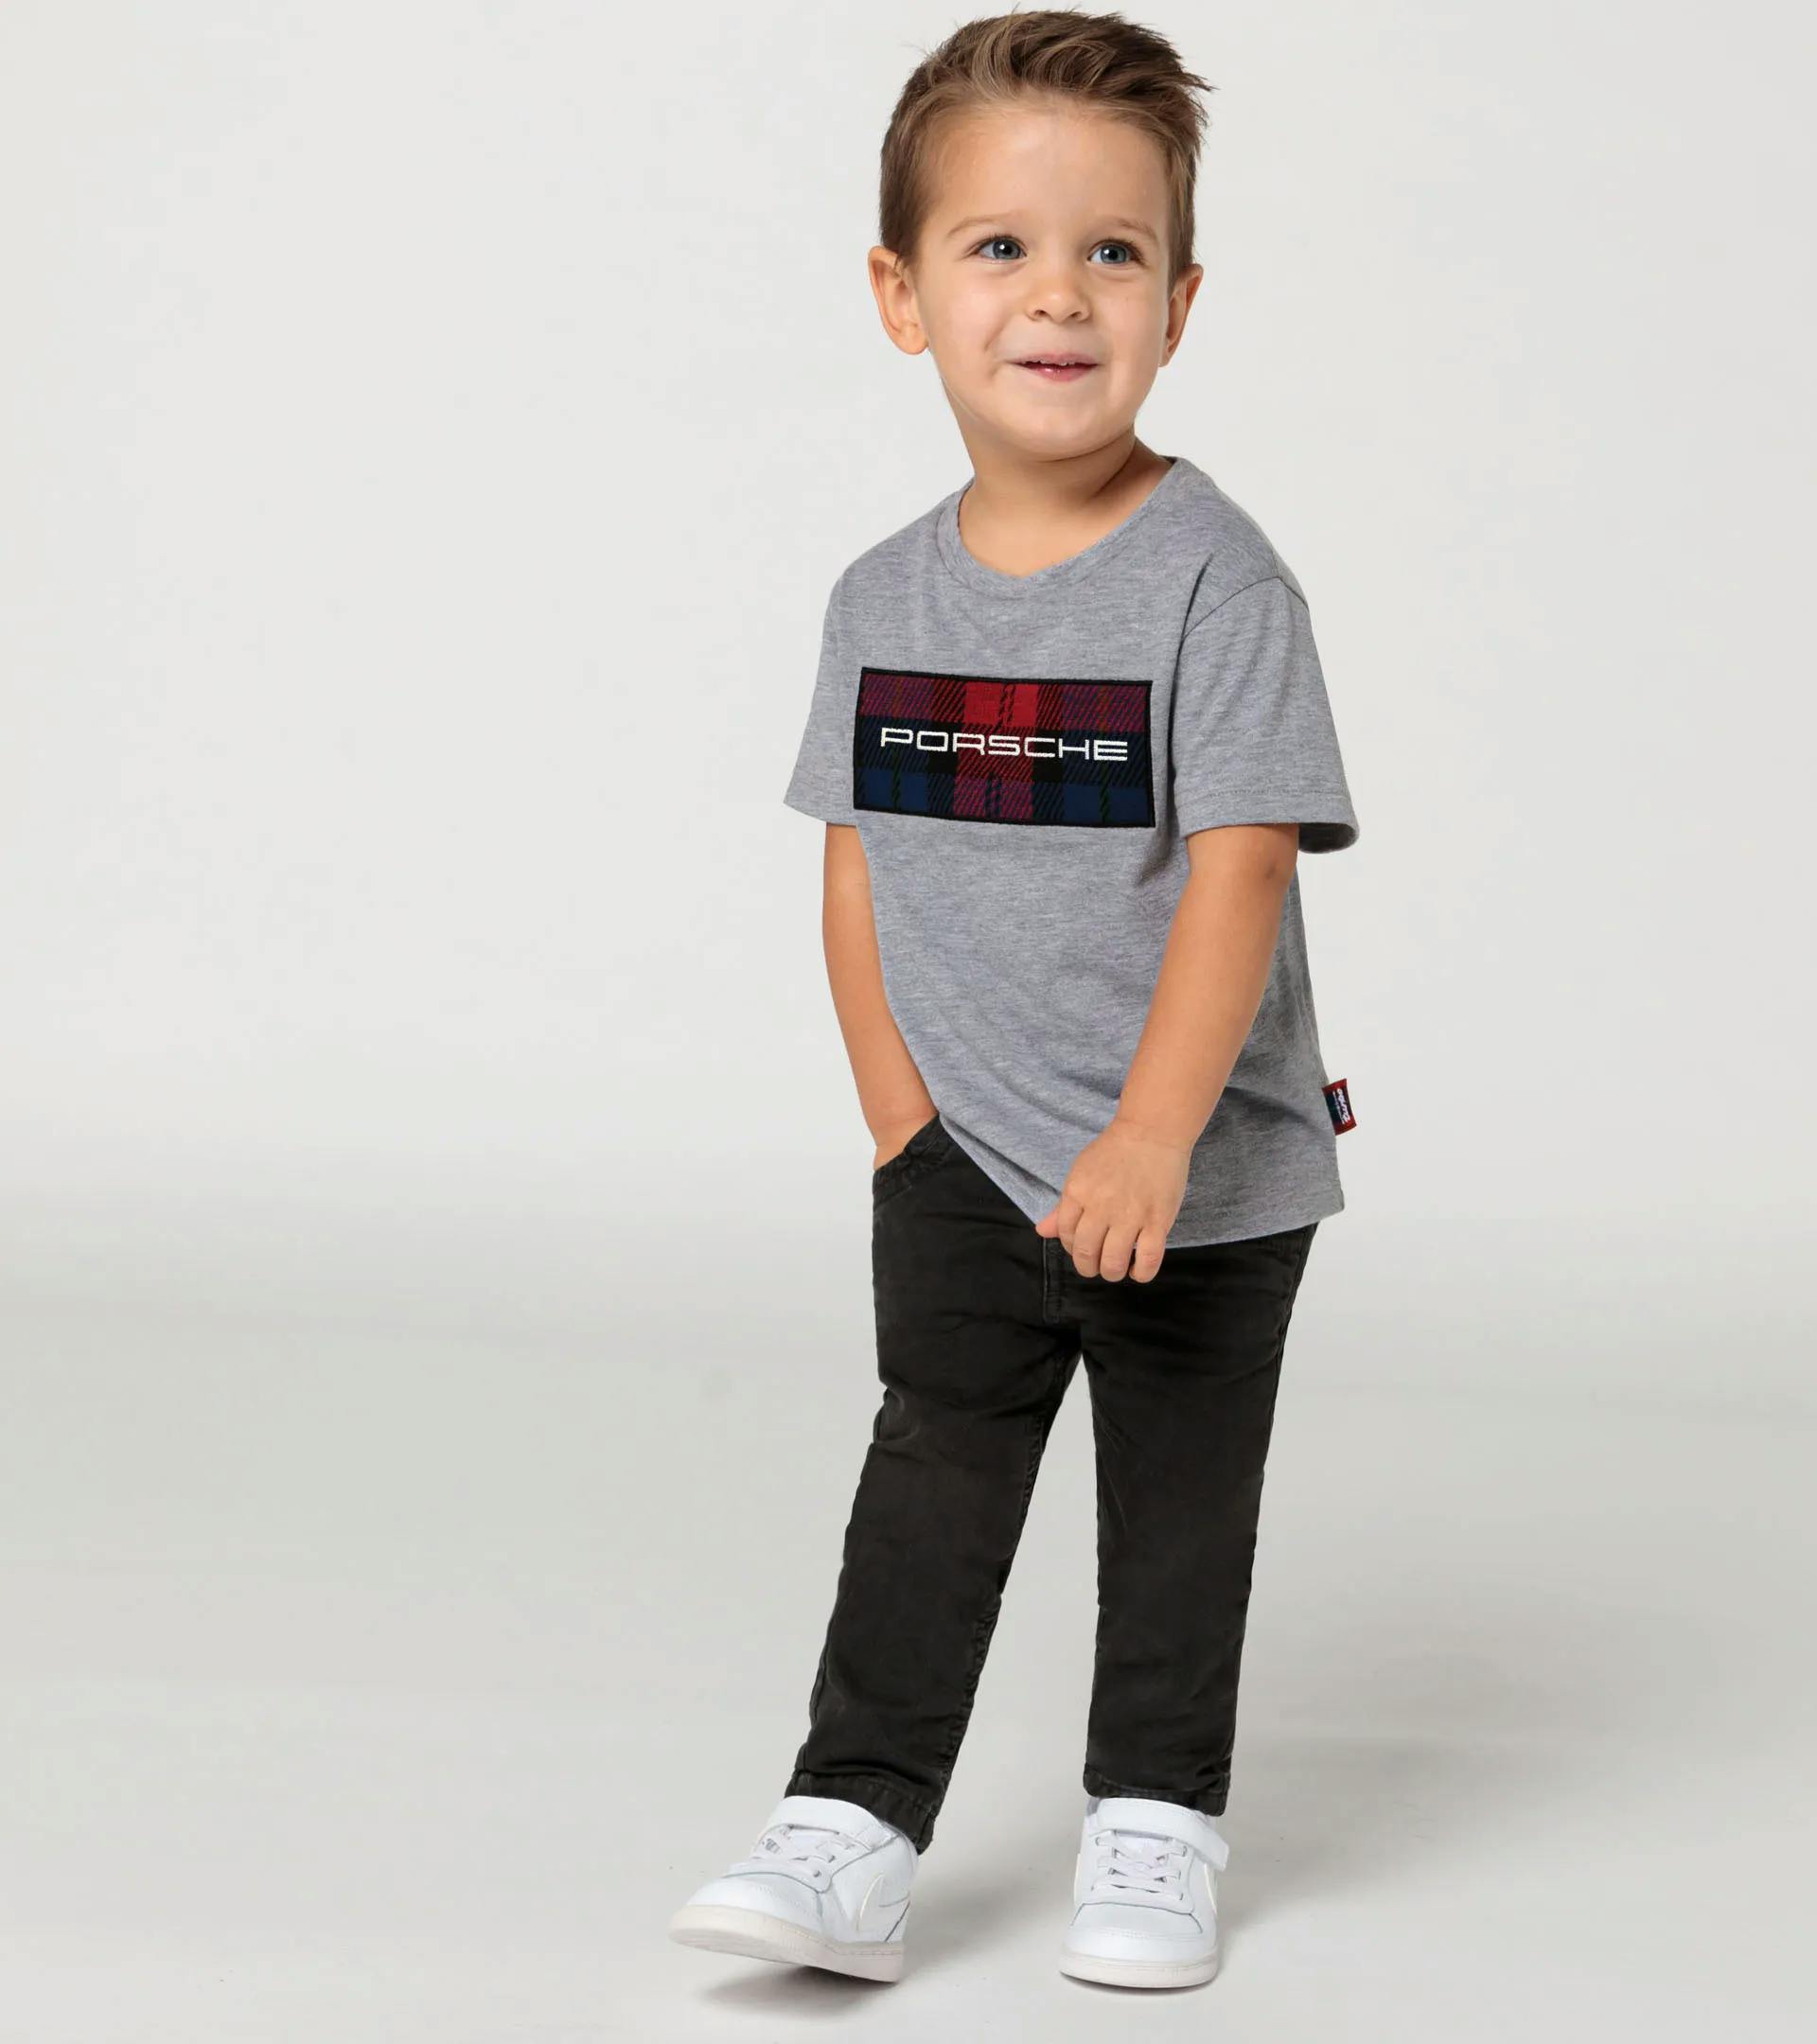 Camiseta infantil – Turbo No. 1 6